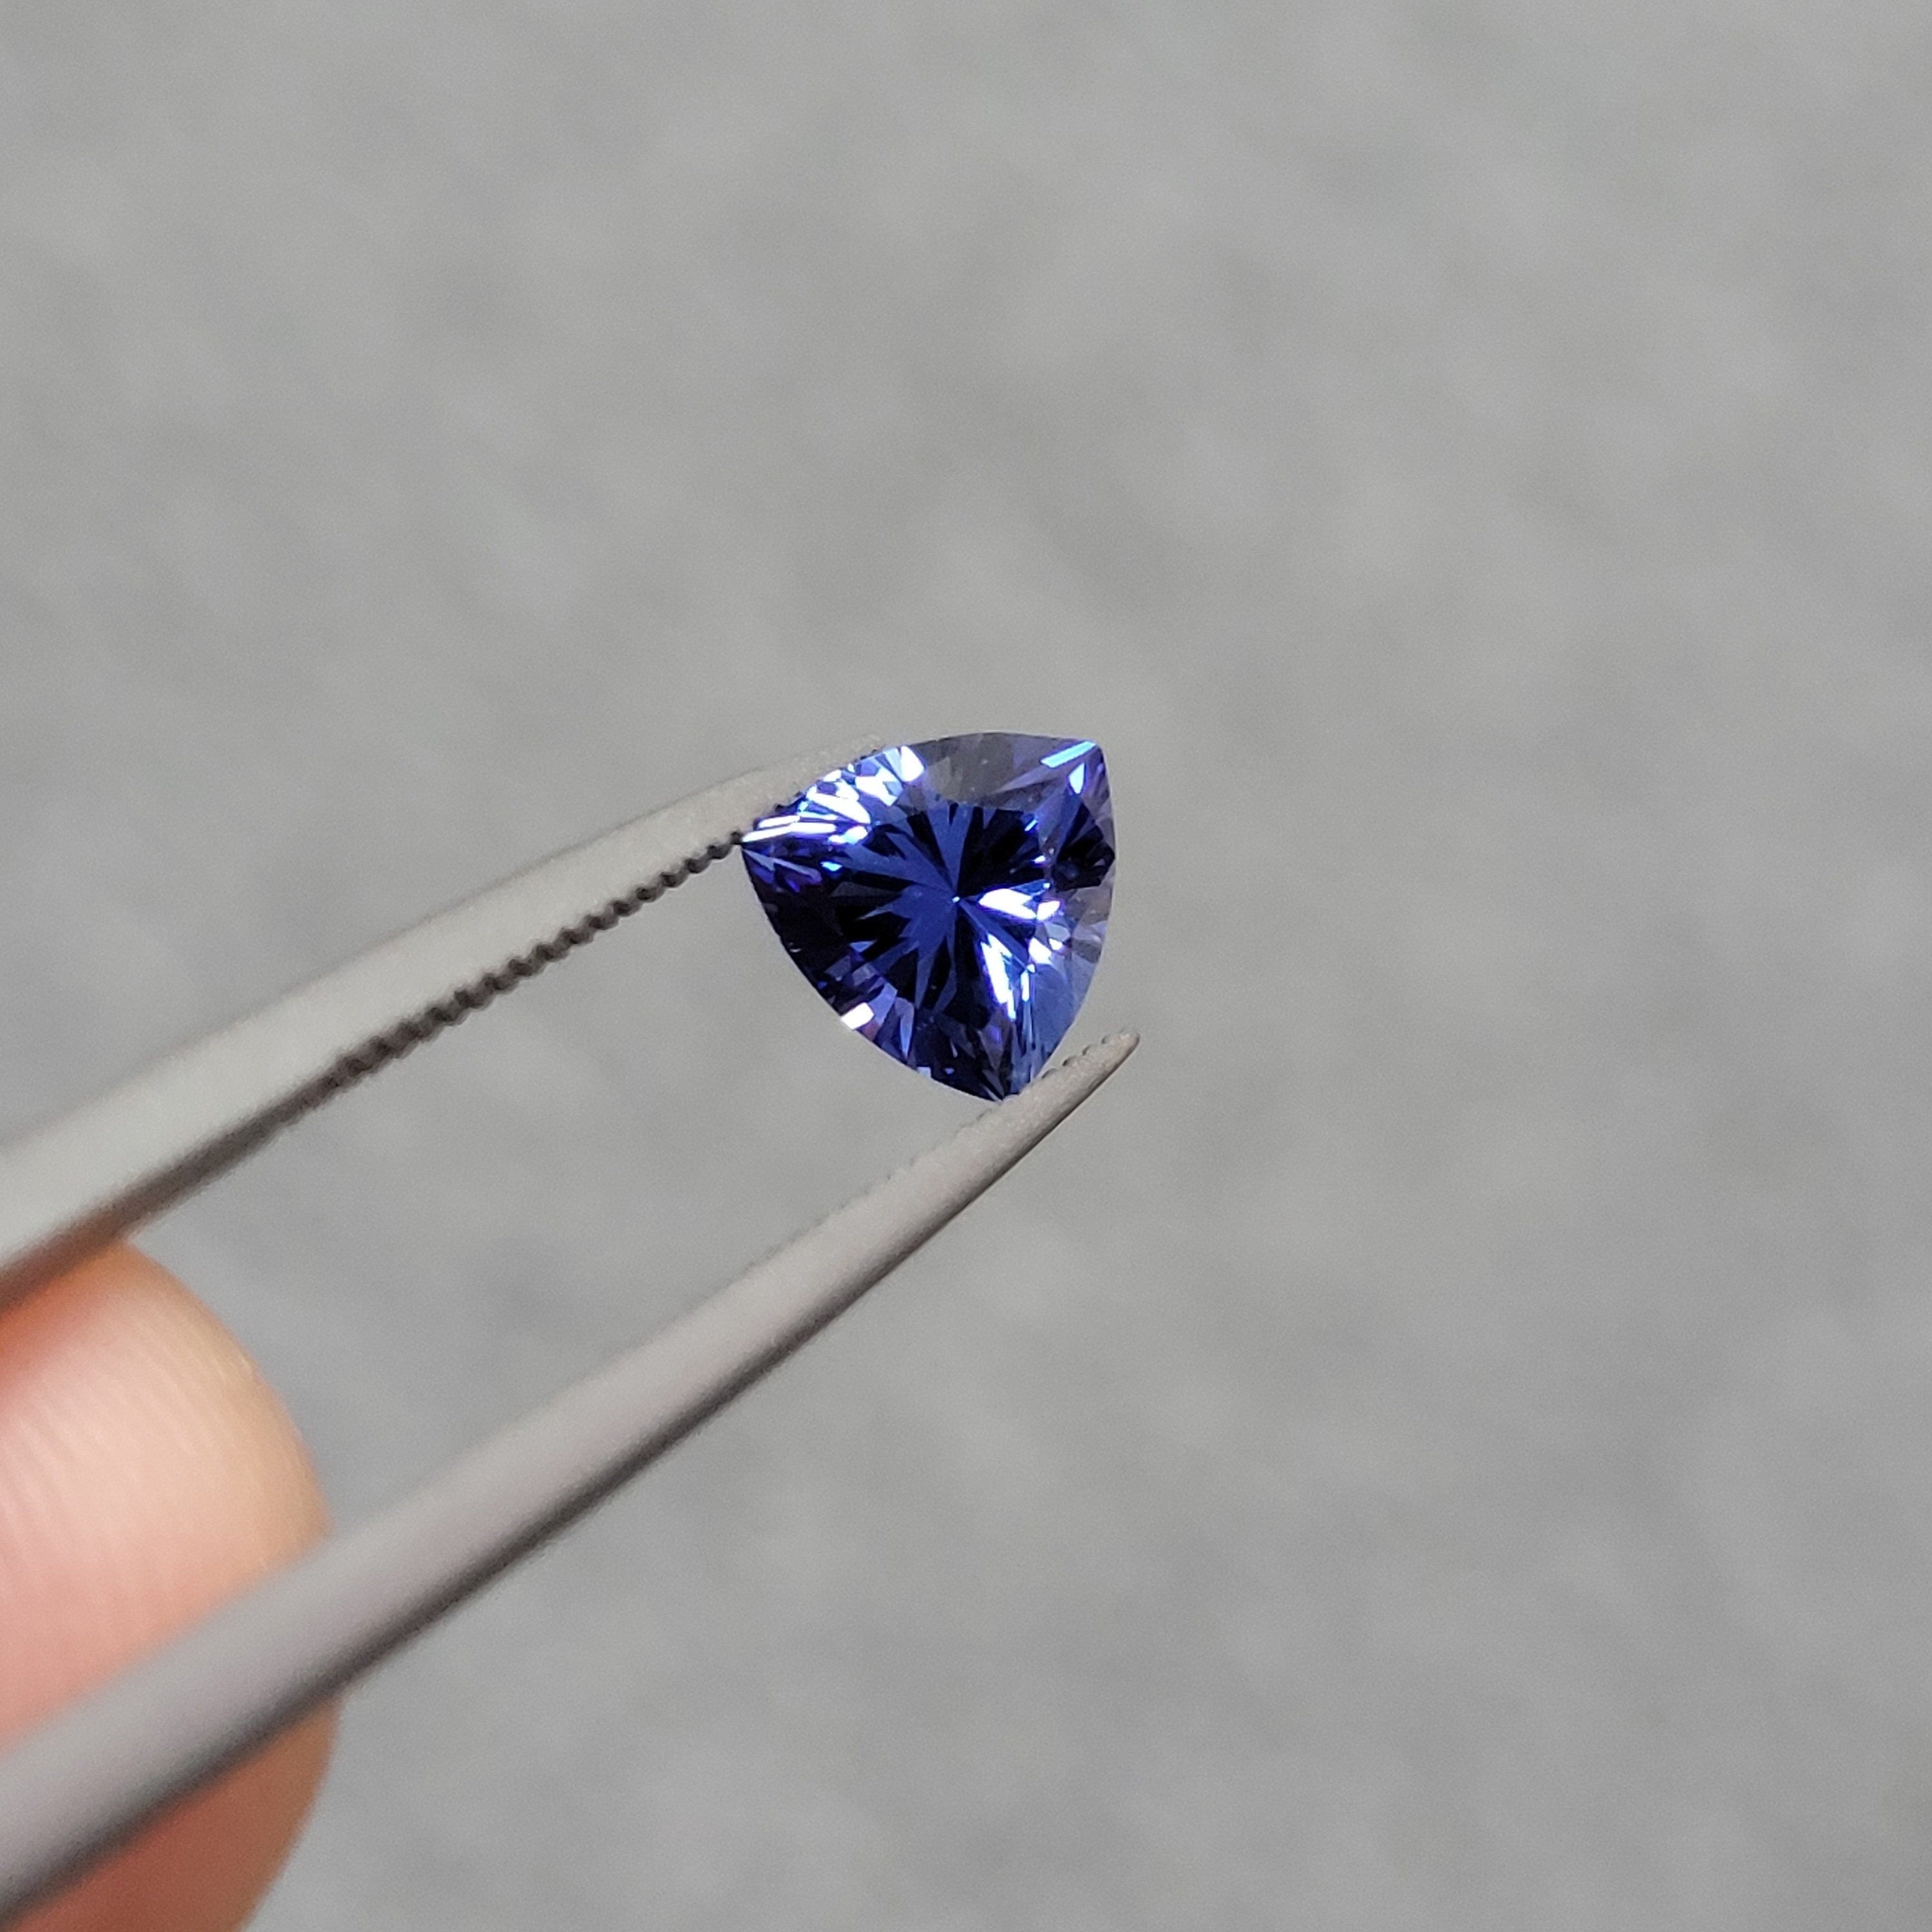 8mm loose sapphire 2.19ct lab grown trillion faceted ceylon sapphire, blue gemstone